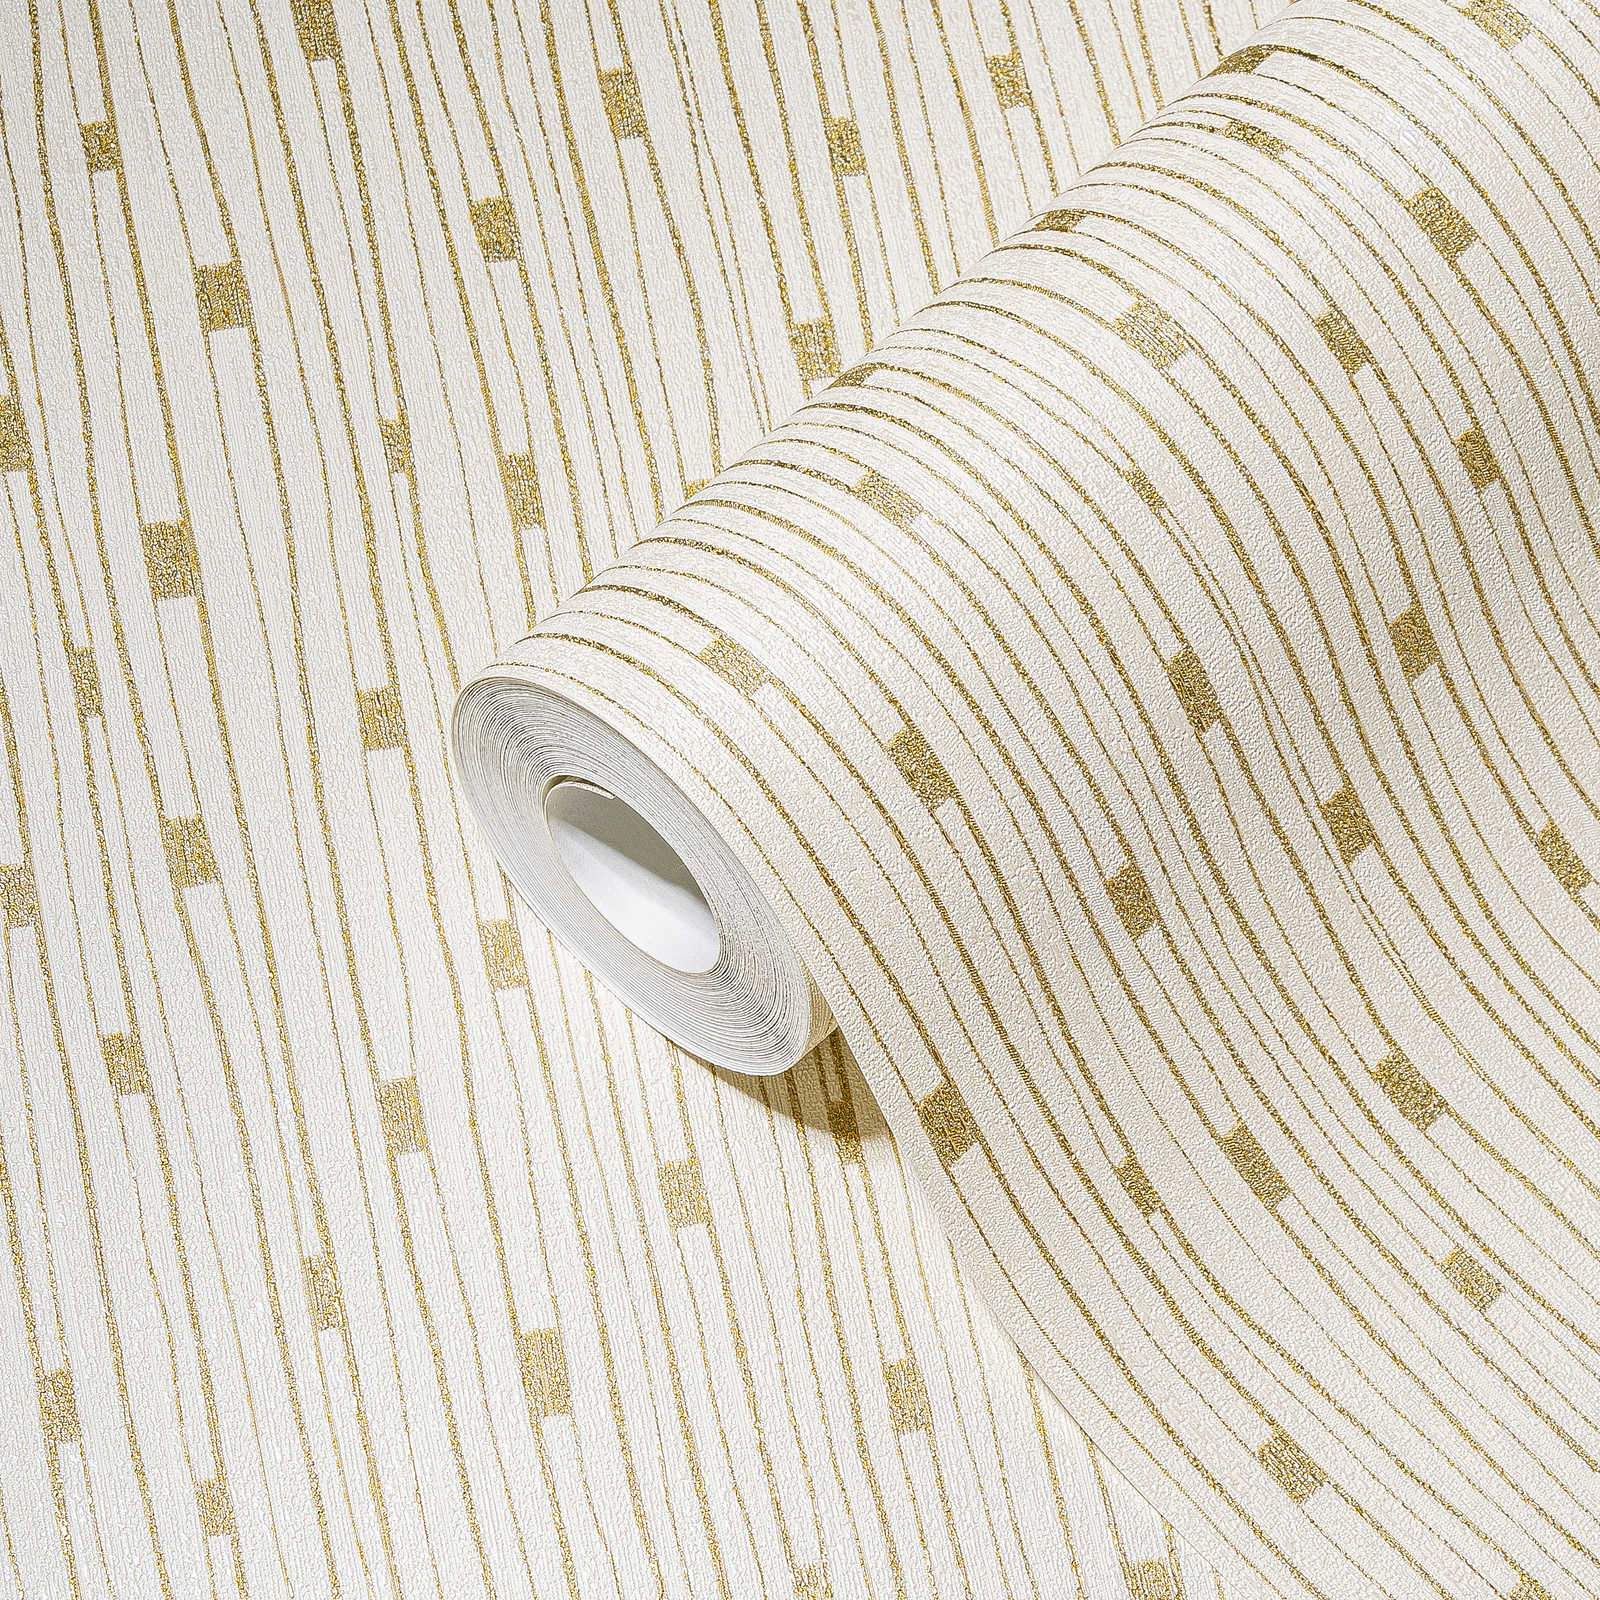             Retro wallpaper 50s line pattern - cream, metallic
        